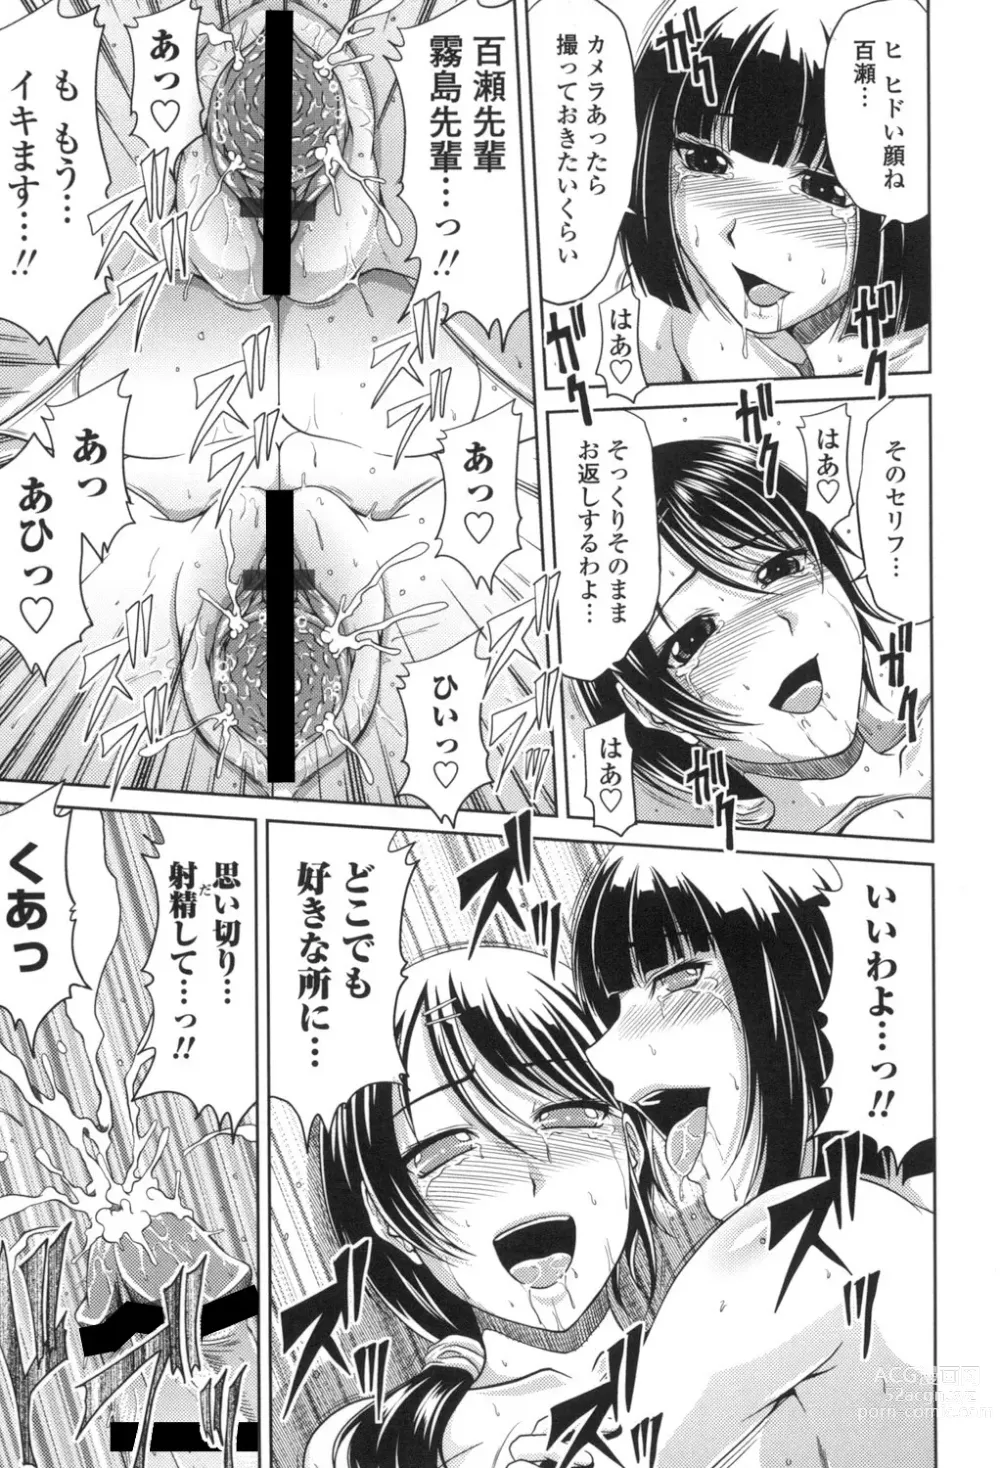 Page 192 of manga Bitch Hi School